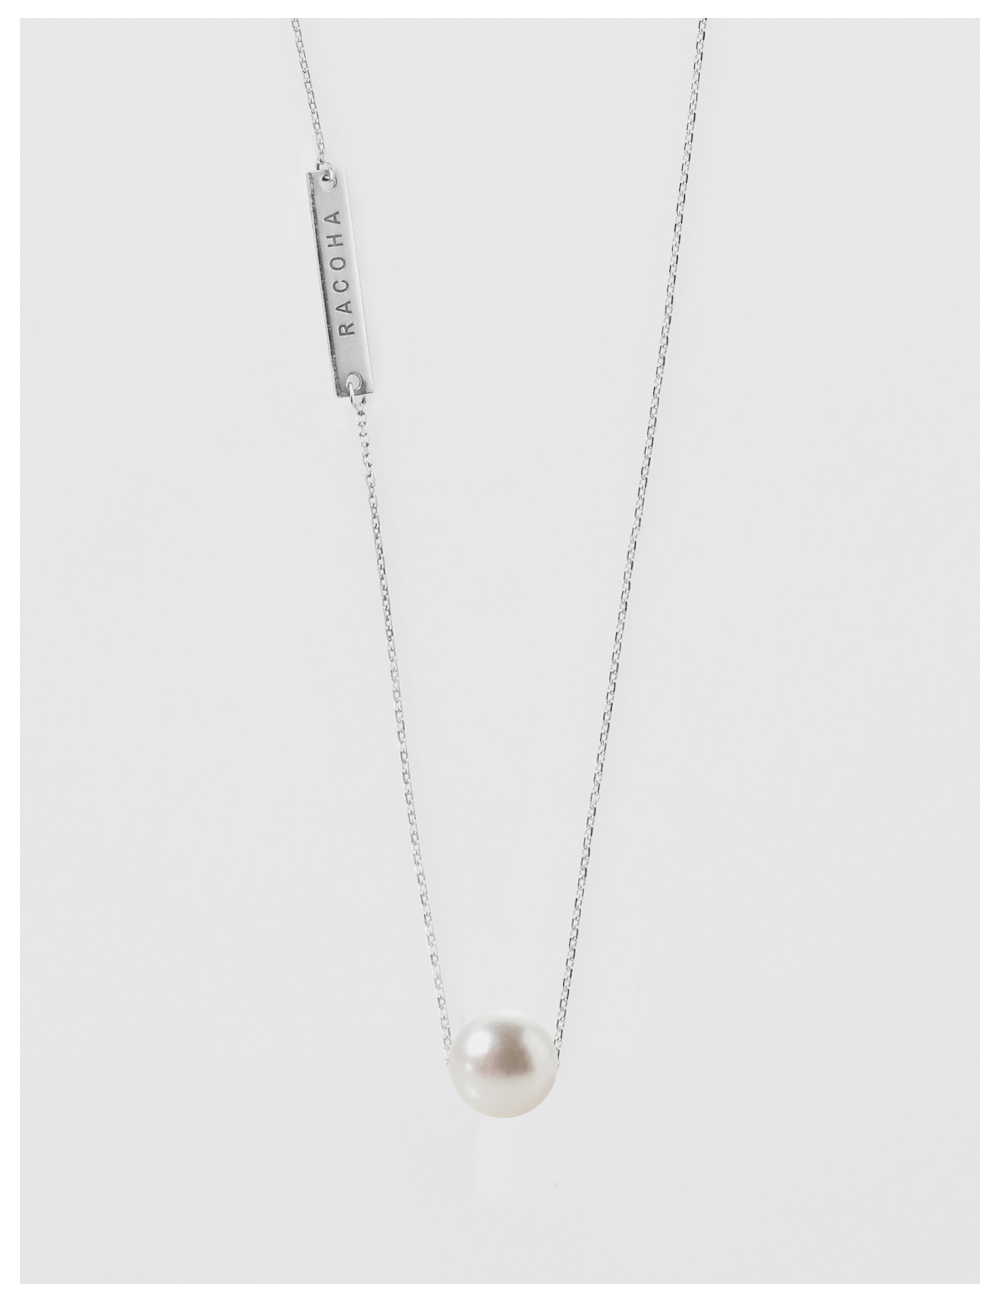 Killout pearl silver necklace